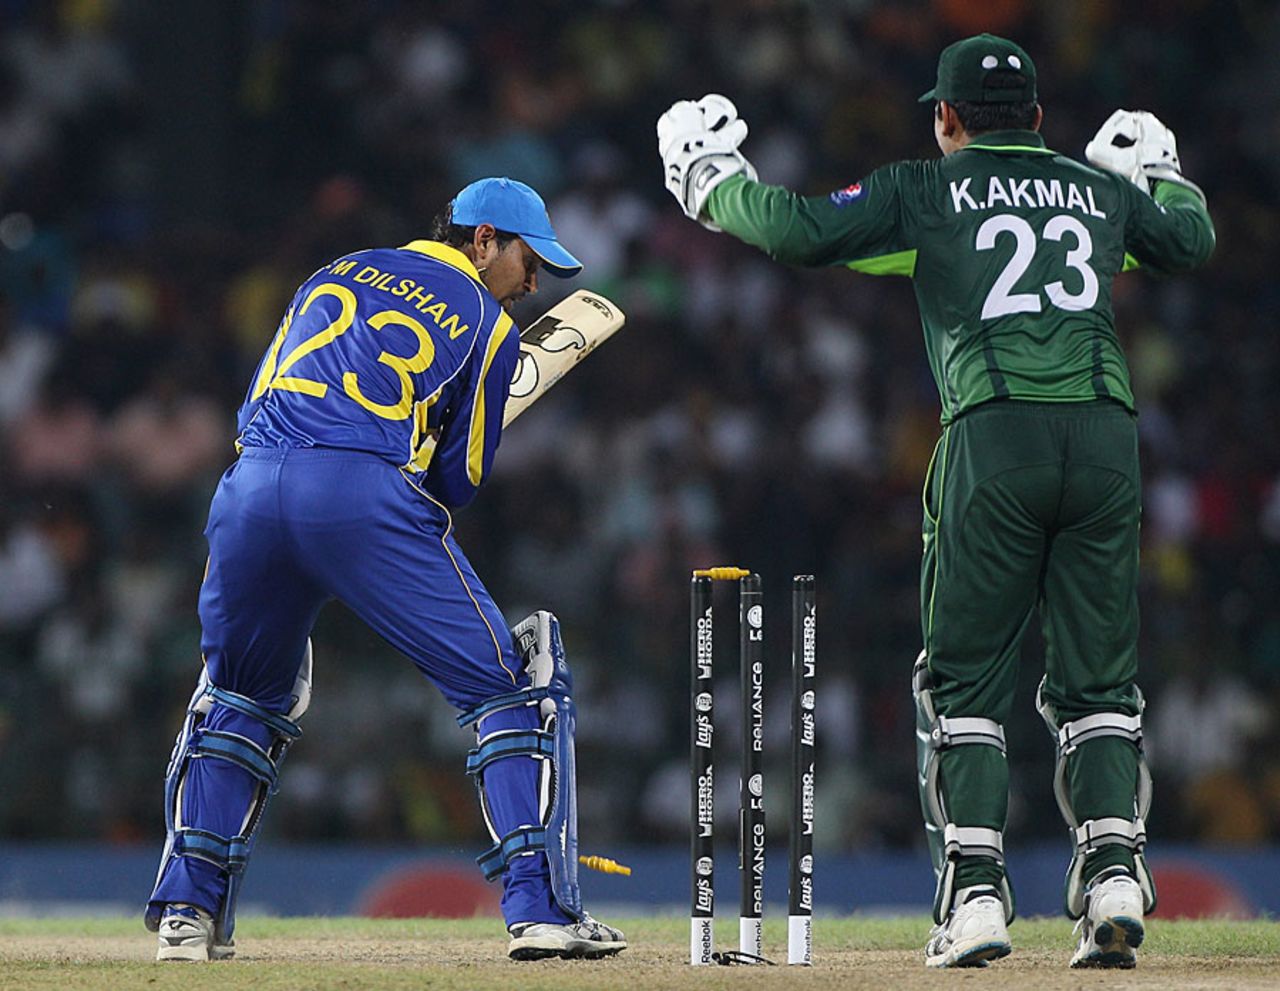 Tillakaratne Dilshan was bowled by Shahid Afridi for 41, Sri Lanka v Pakistan, World Cup, Group A, Colombo, February 26, 2011